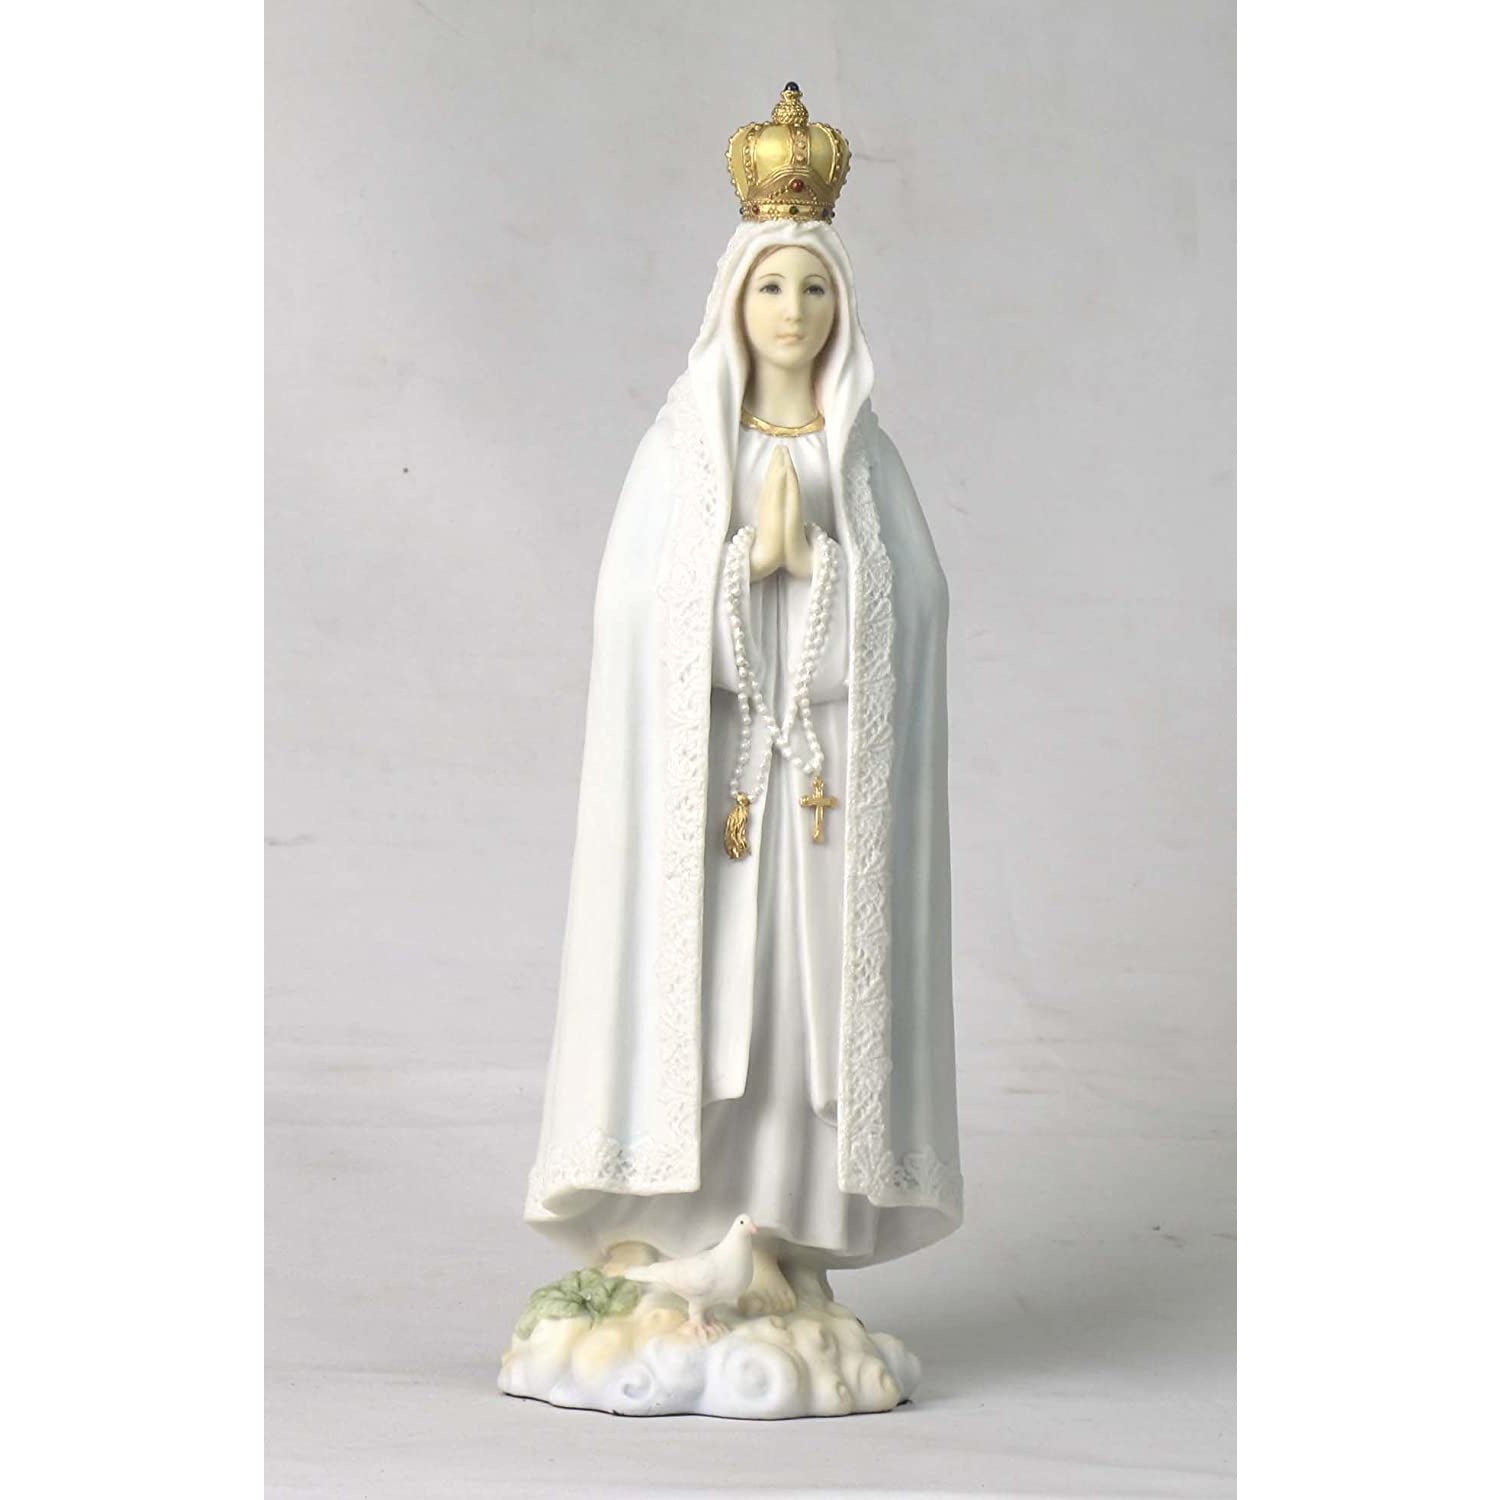 US 10.63 Inch Our Lady of Fatima Decorative Statue Figurine, Light colors